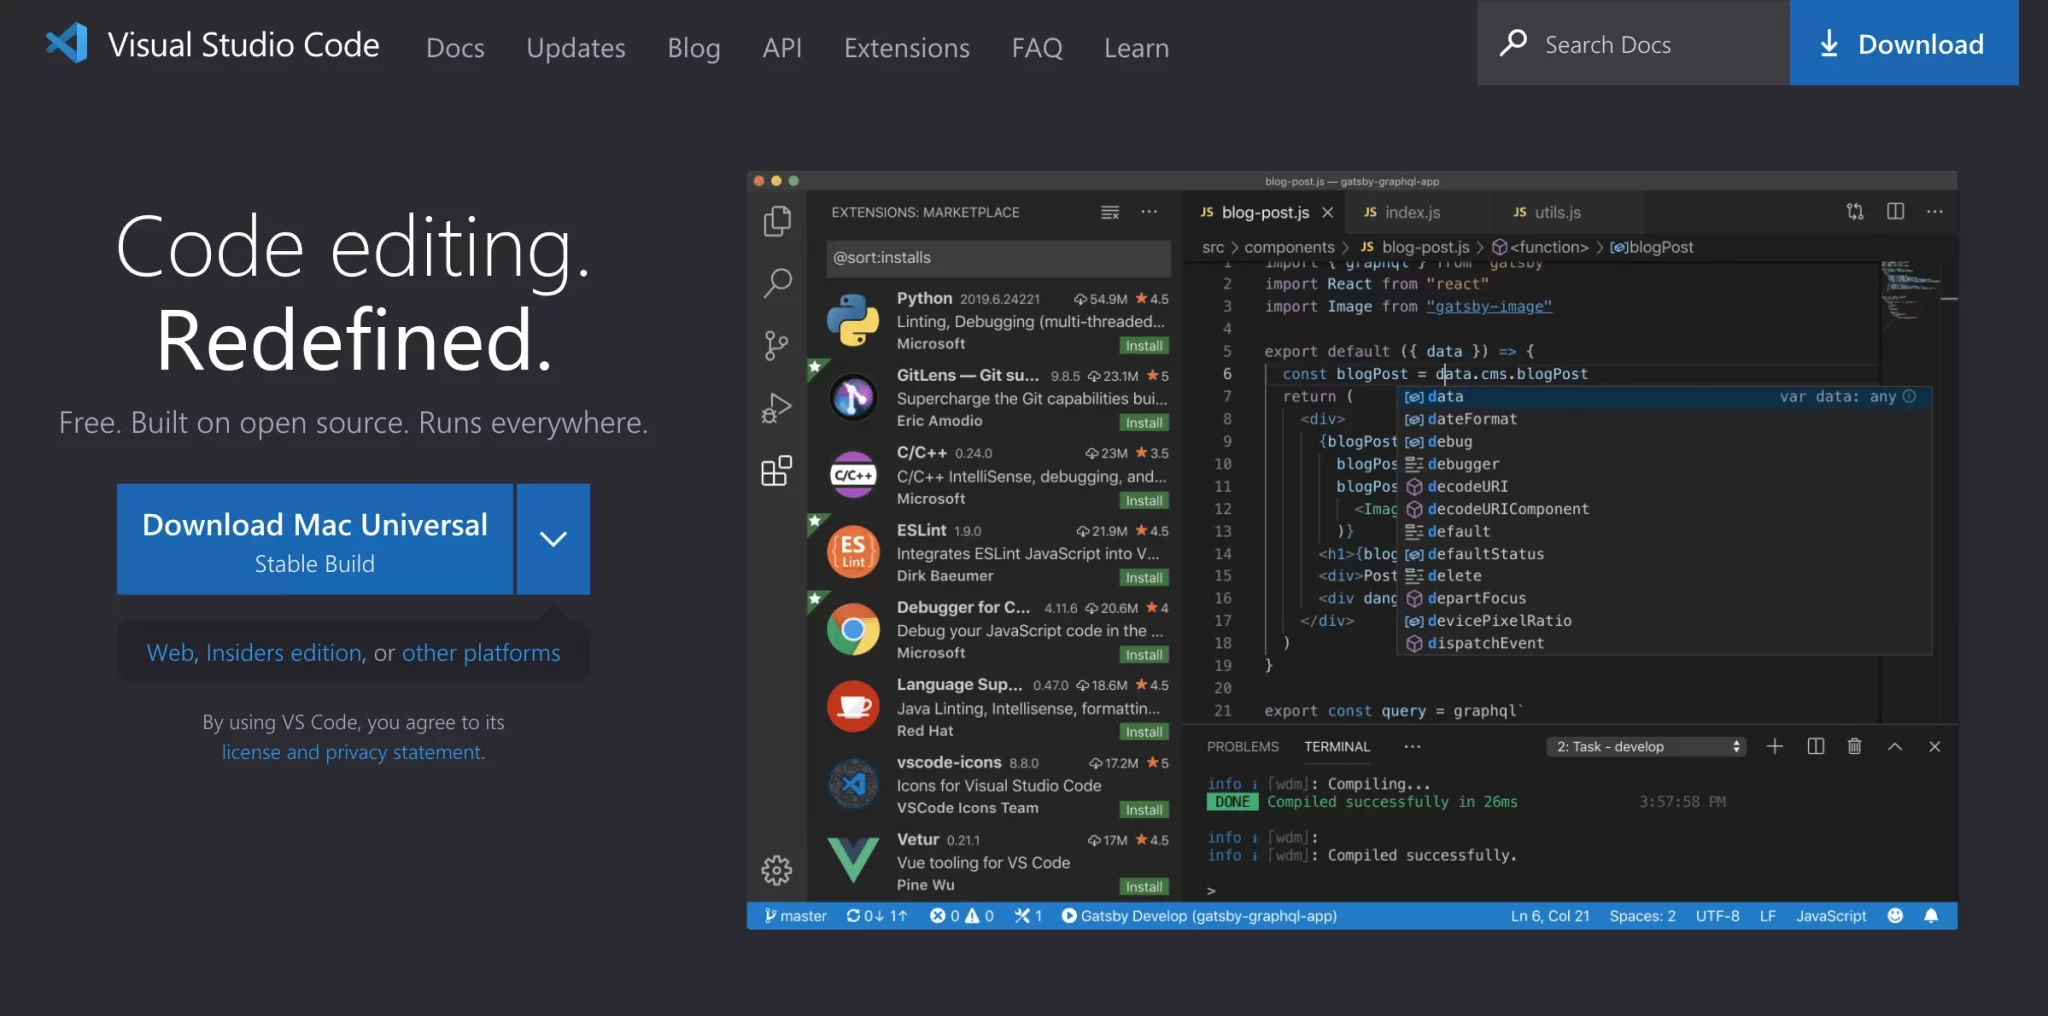 Visual Studio Code is a useful development tool for WordPress site creators.